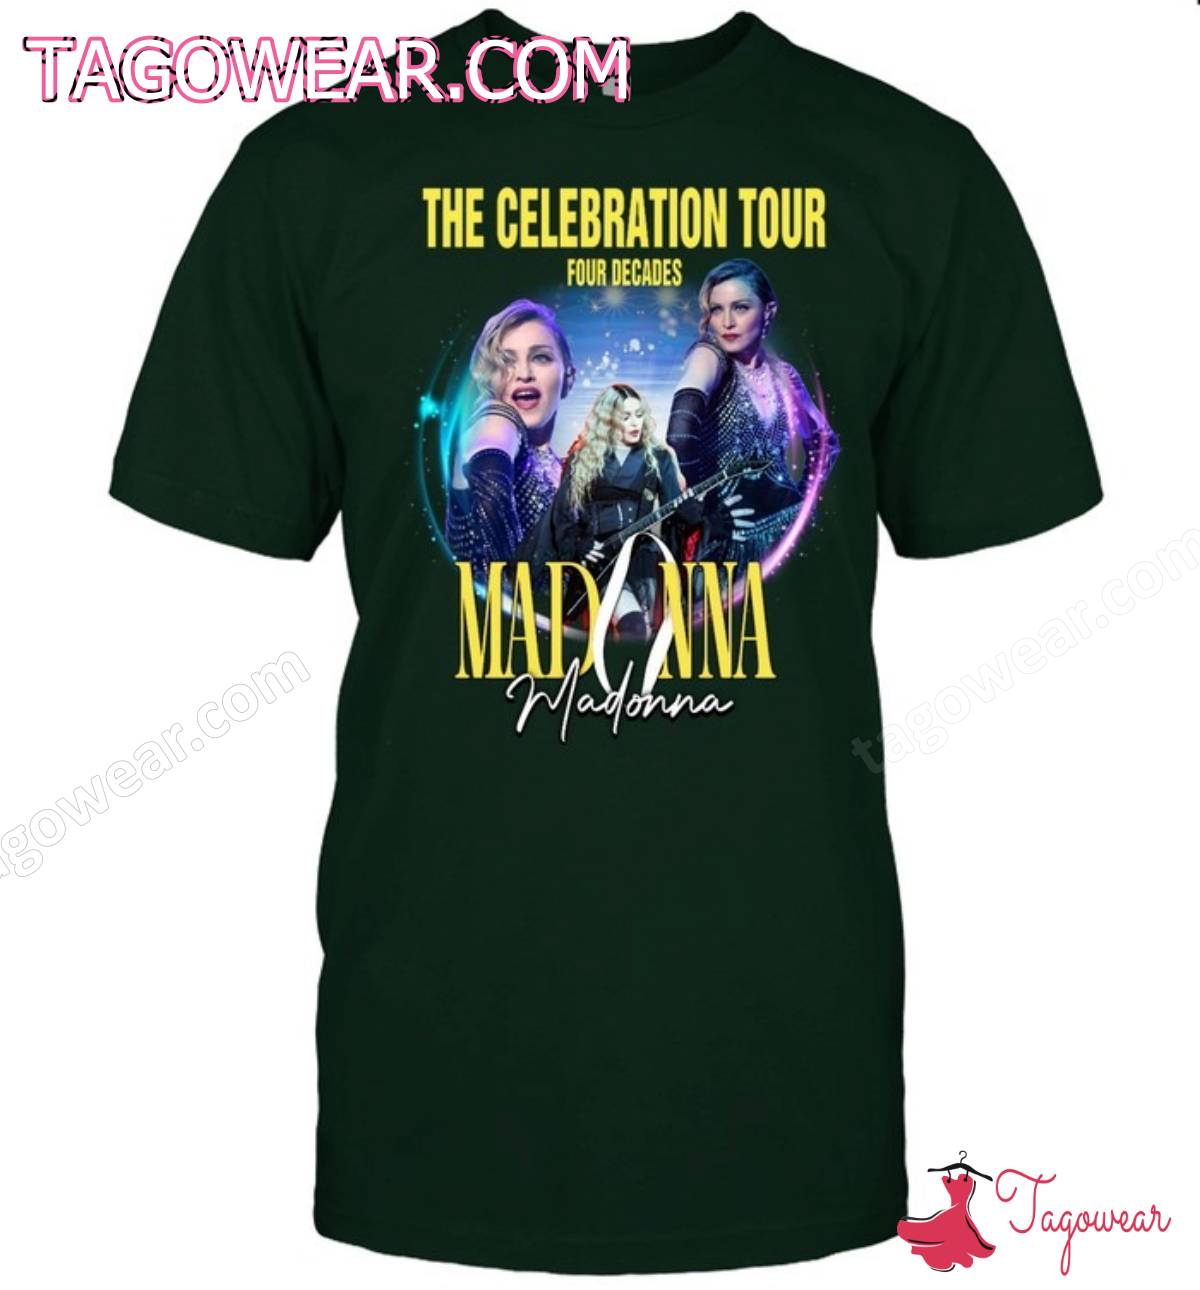 Madonna The Celebration Tour Four Decades Shirt, Tank Top a